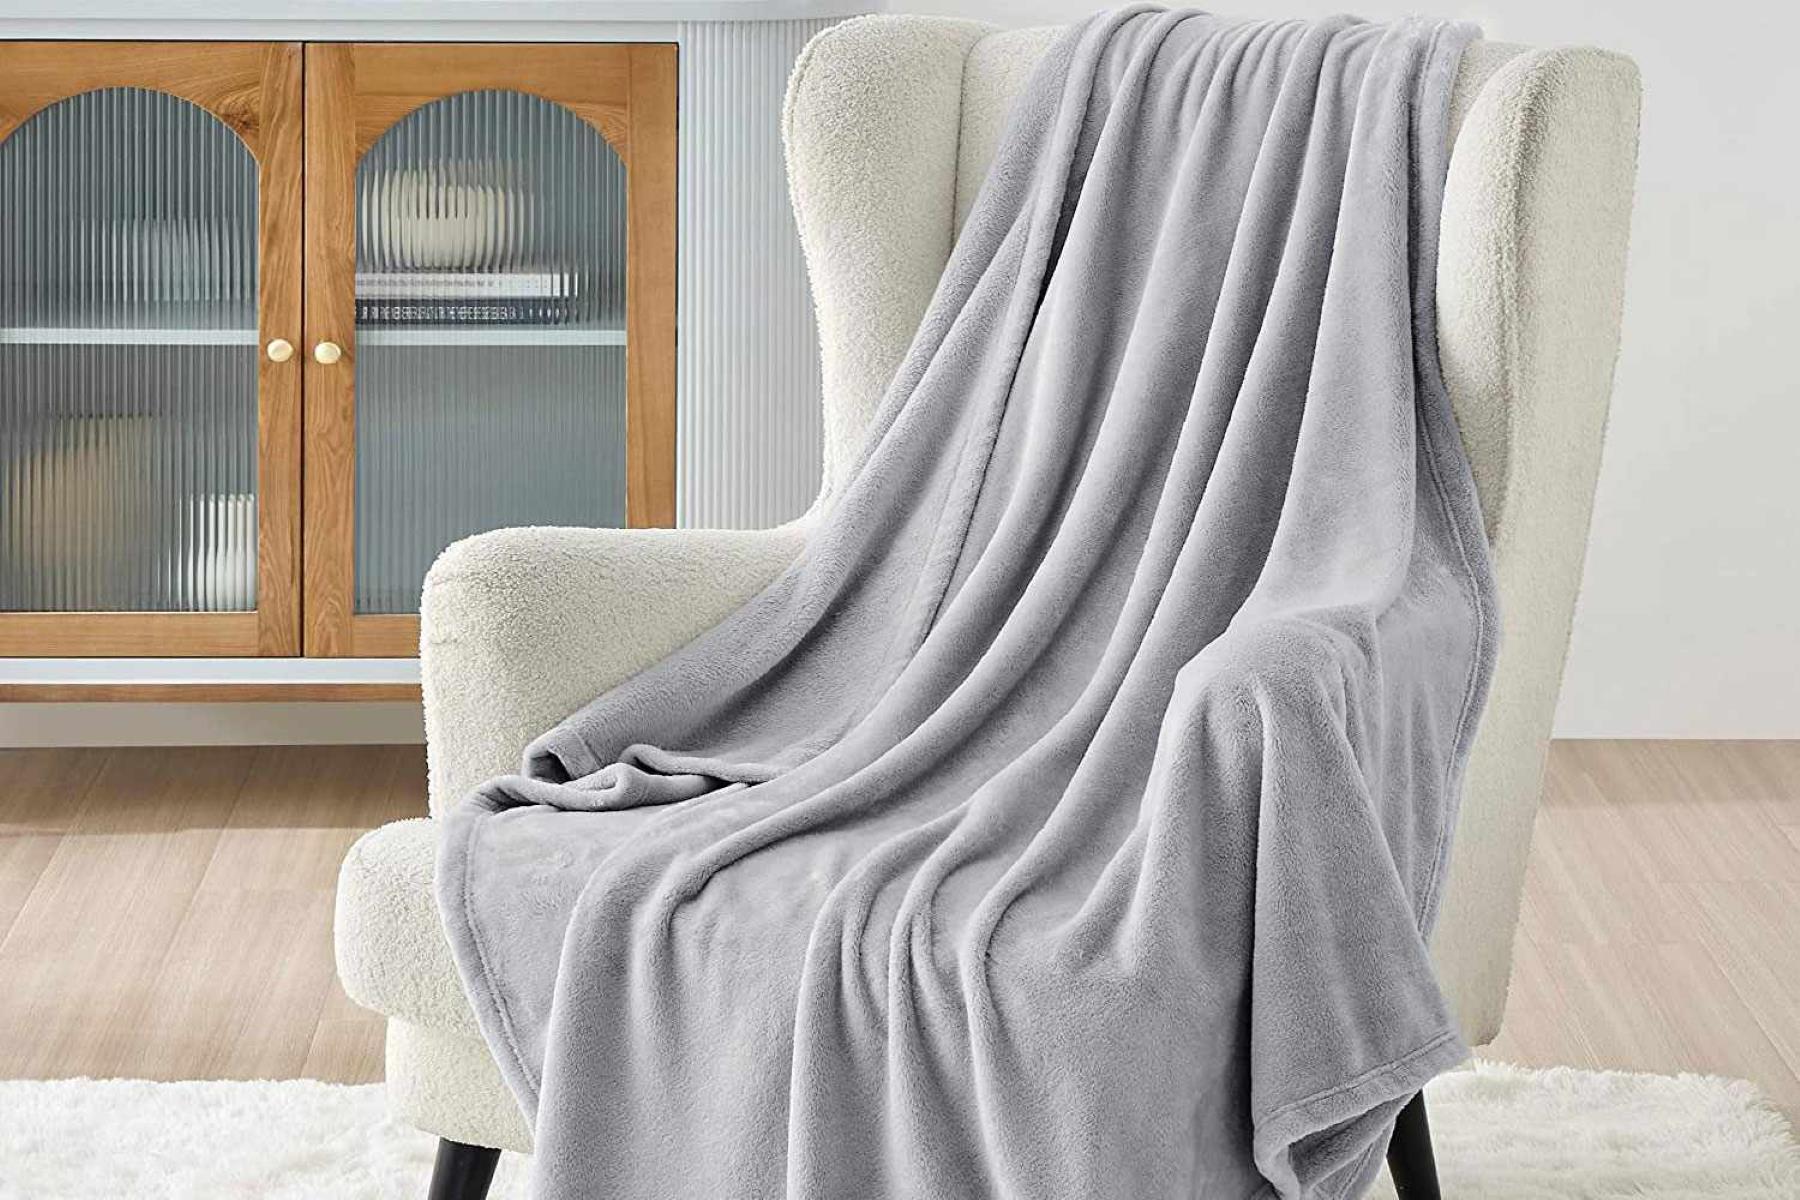 What Is A Fleece Blanket